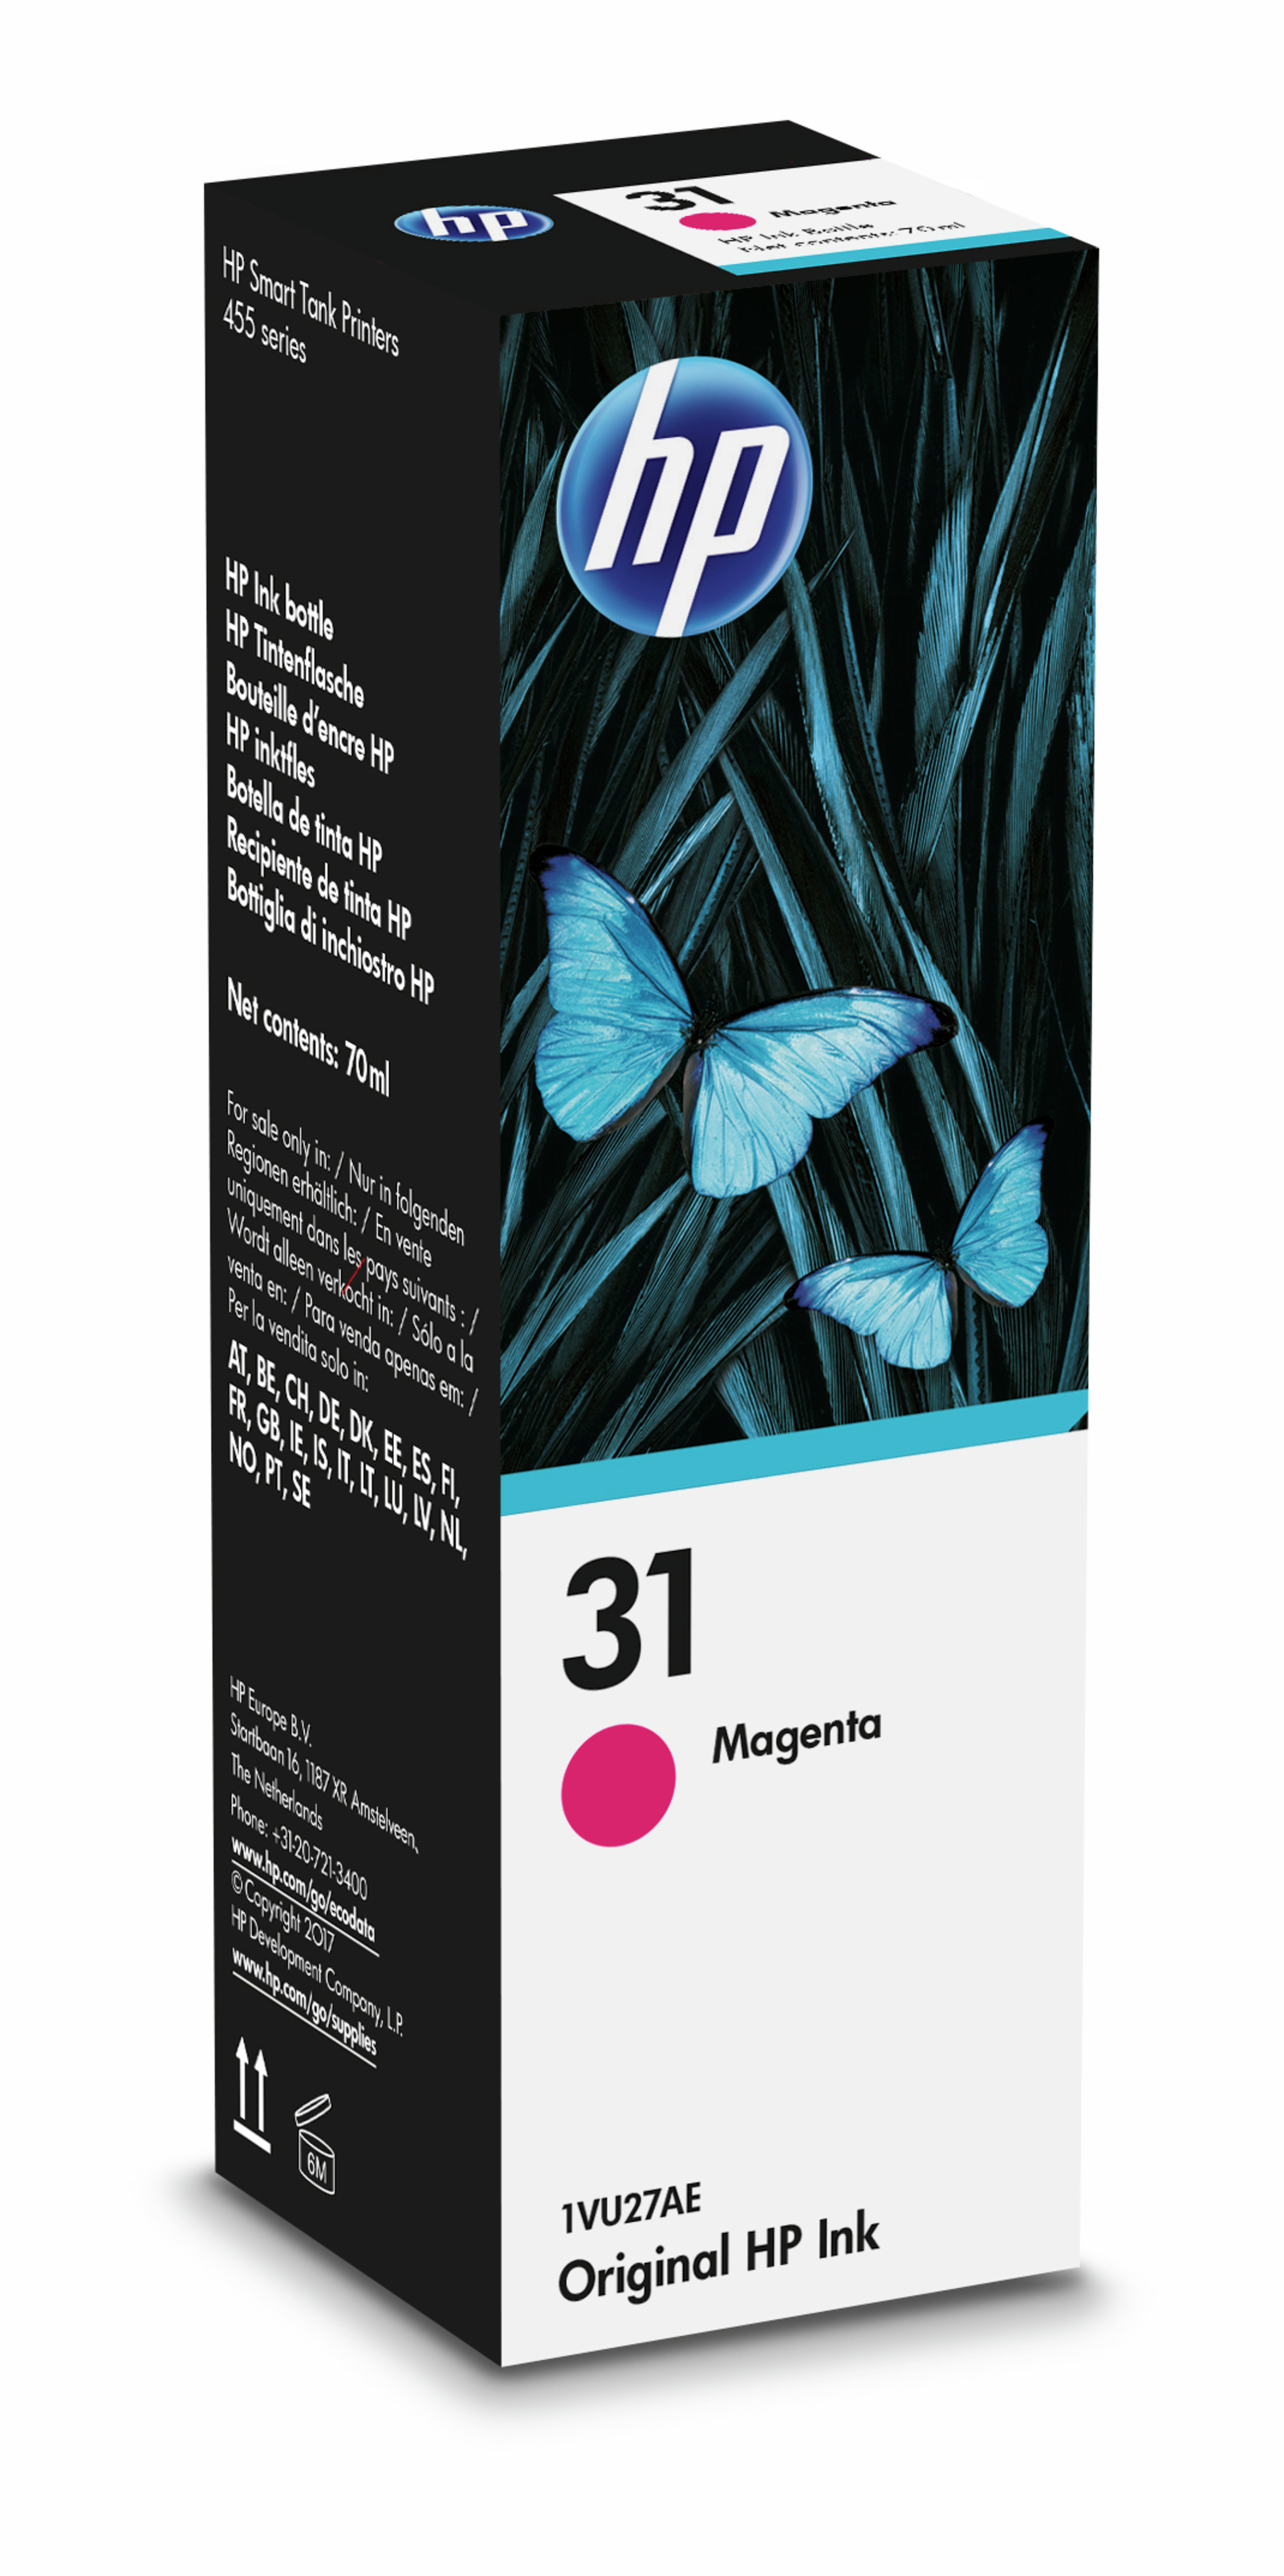 No31 magenta ink cartridge